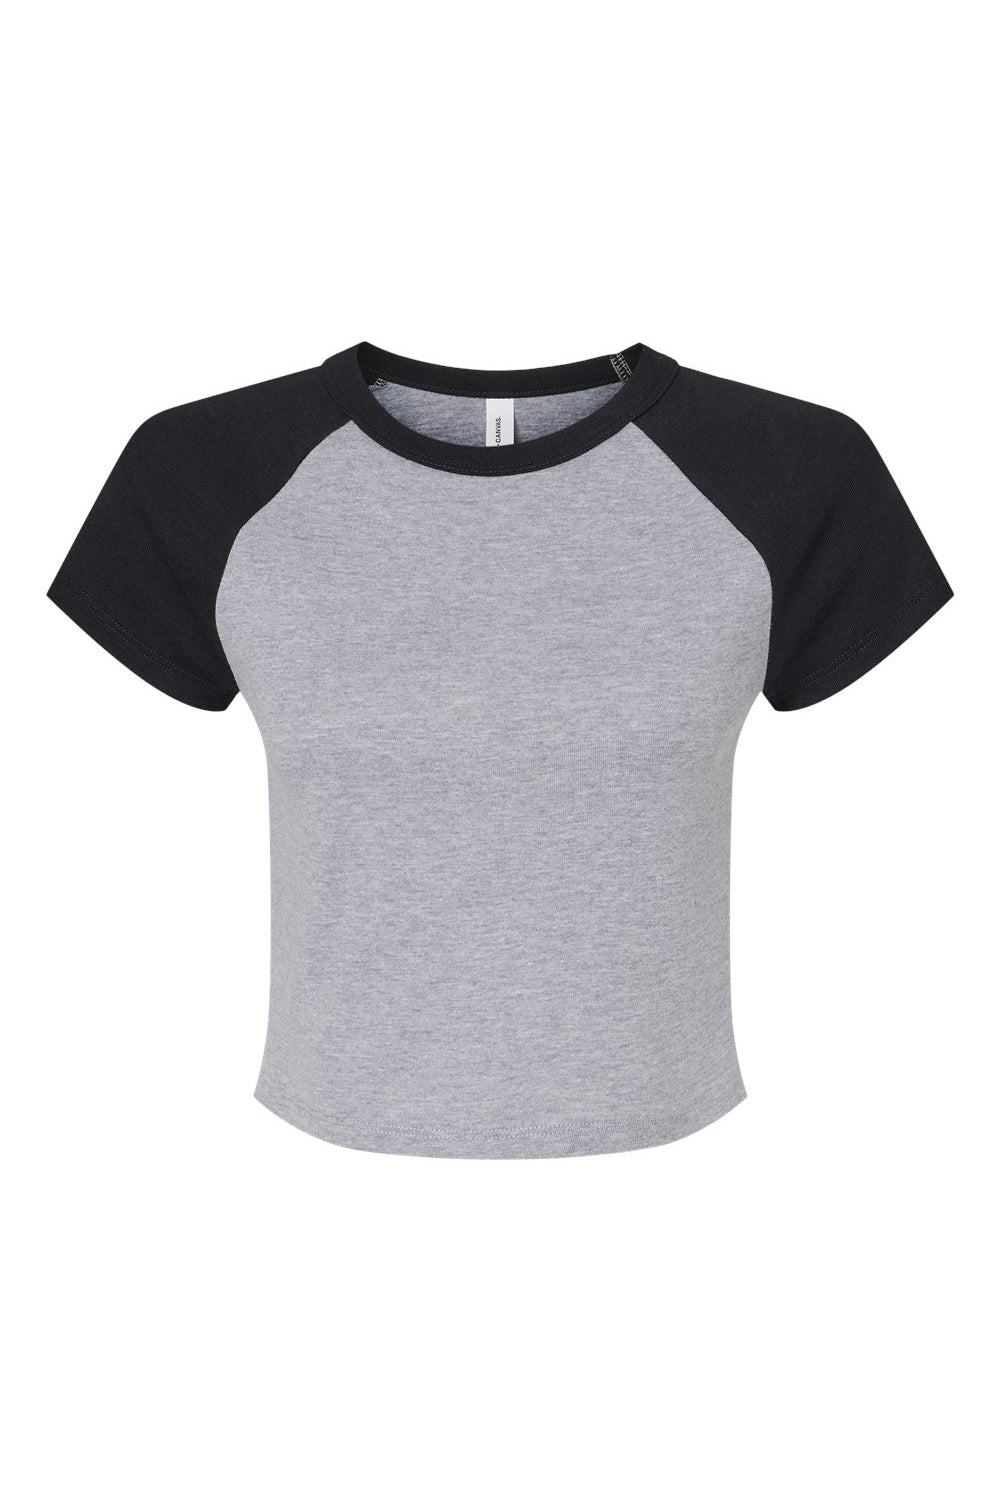 Bella + Canvas 1201 Womens Micro Ribbed Raglan Short Sleeve Crewneck Baby T-Shirt Heather Grey/Black Flat Front